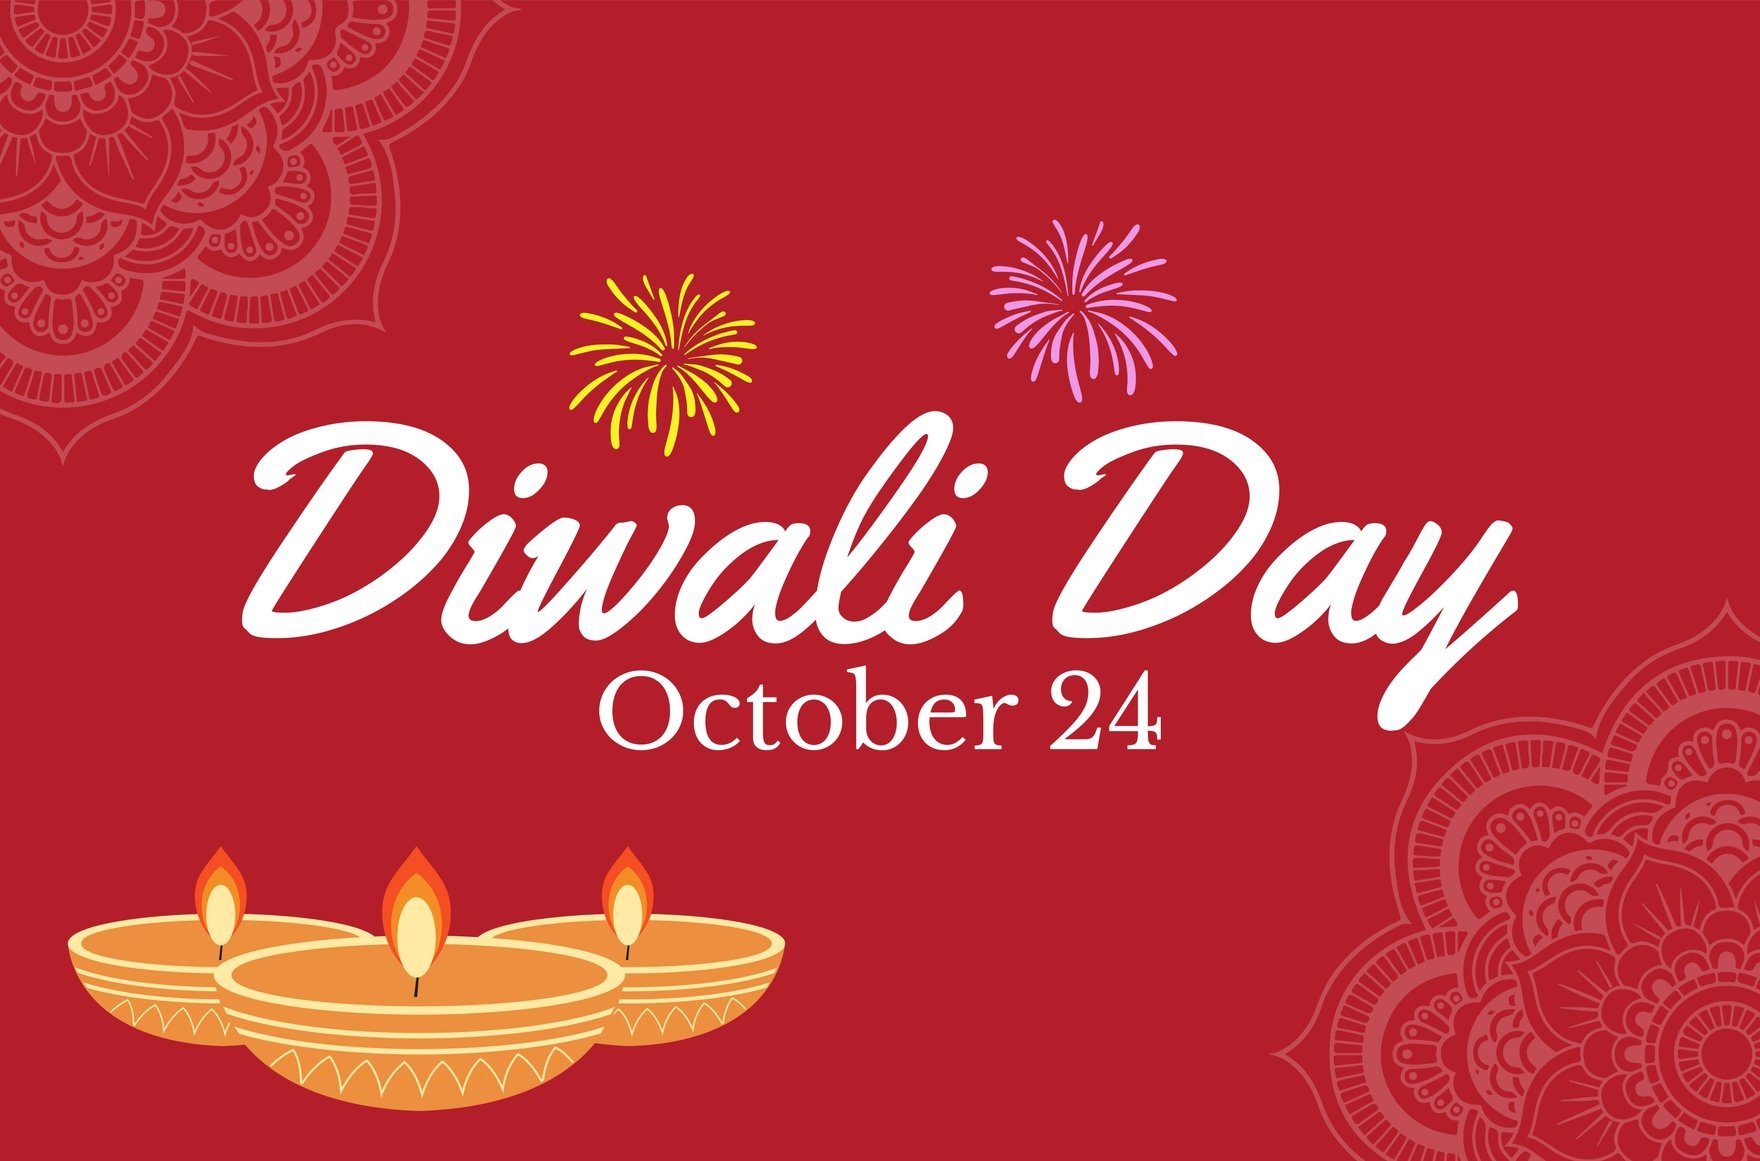 Free Diwali Day Banner in Illustrator, PSD, EPS, SVG, JPG, PNG